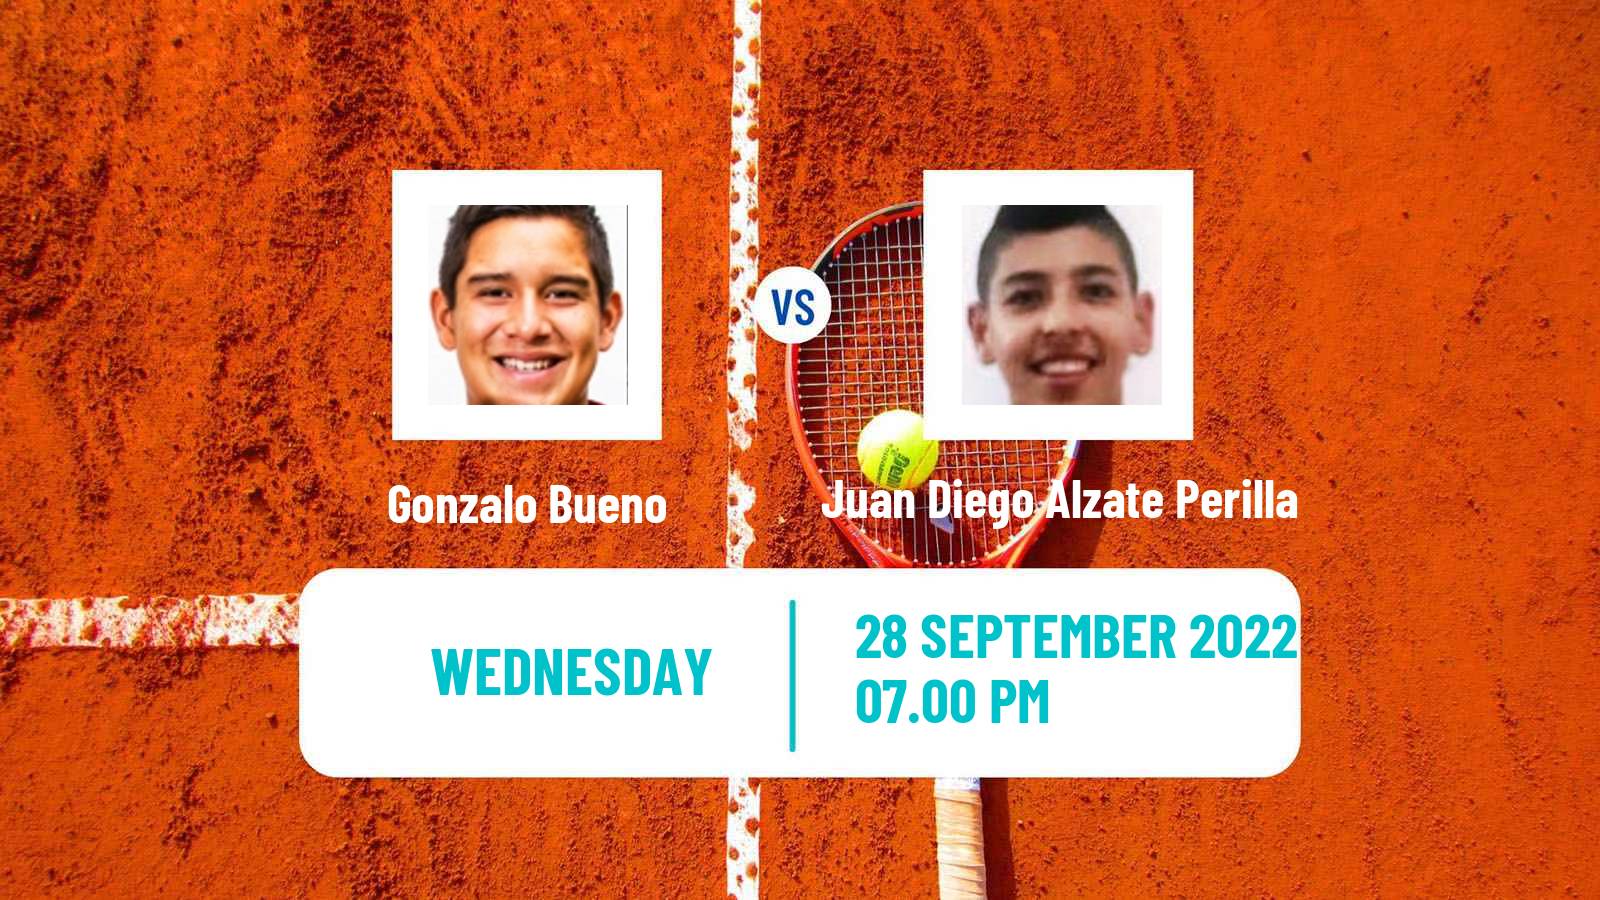 Tennis ITF Tournaments Gonzalo Bueno - Juan Diego Alzate Perilla